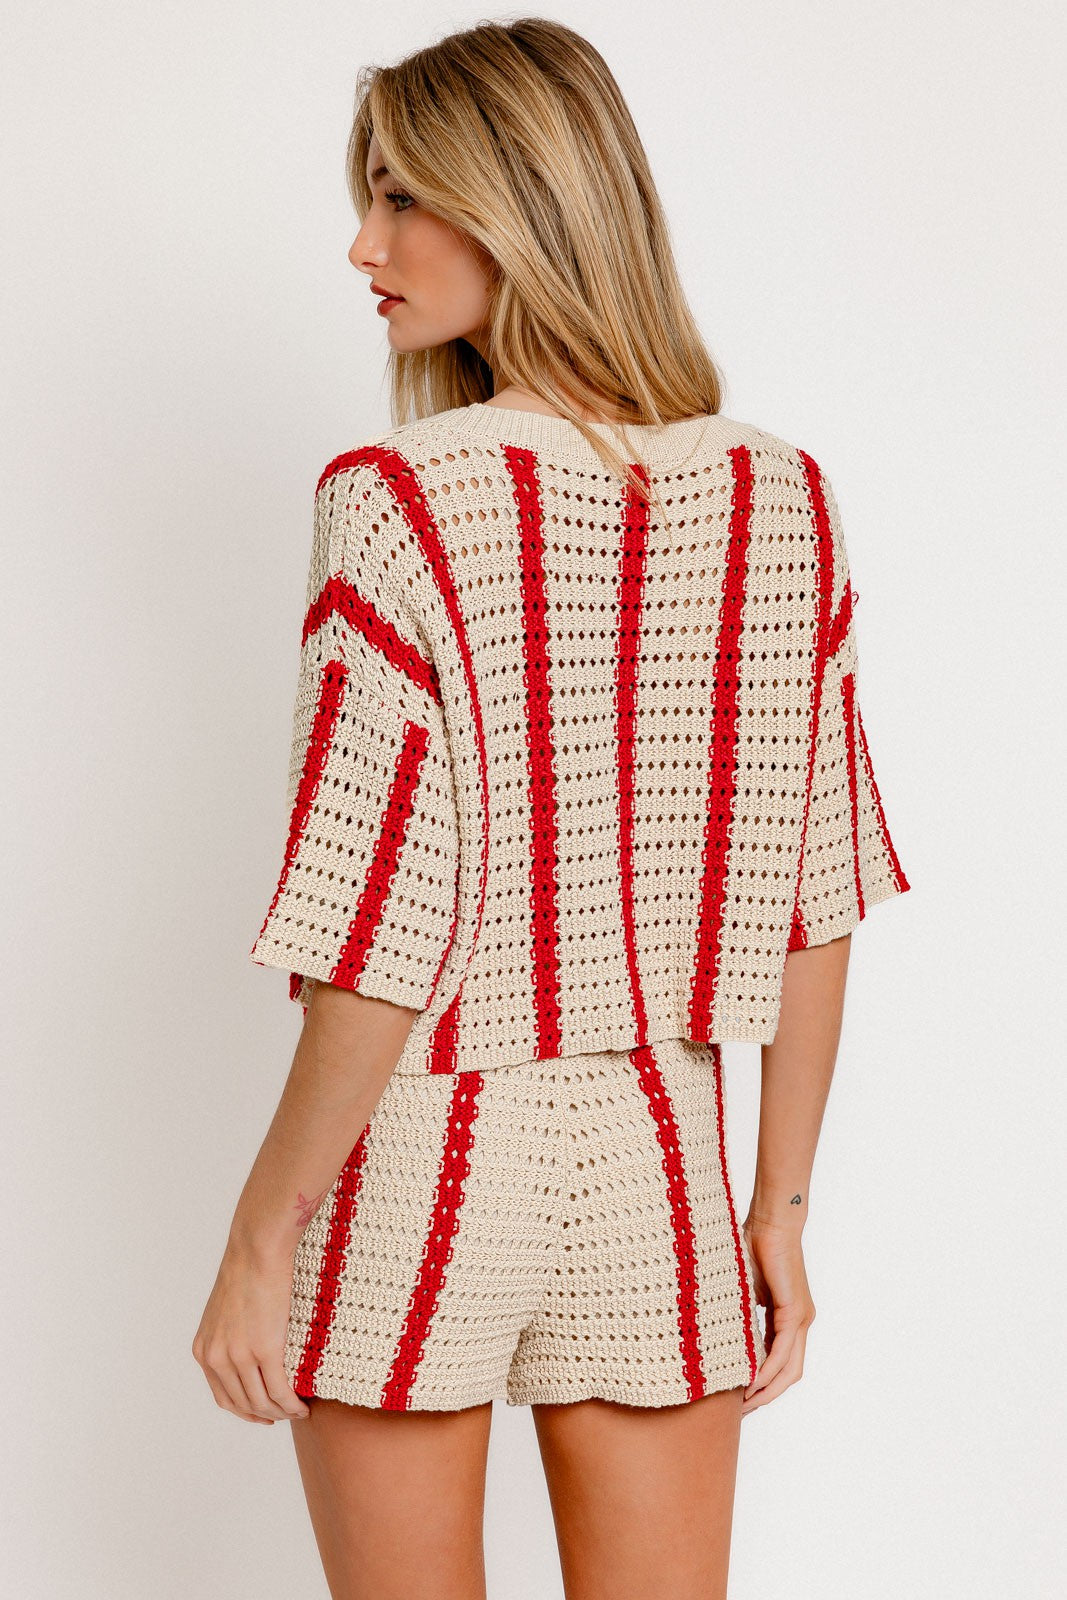 Crochet stripe short & crop top (sold separate)